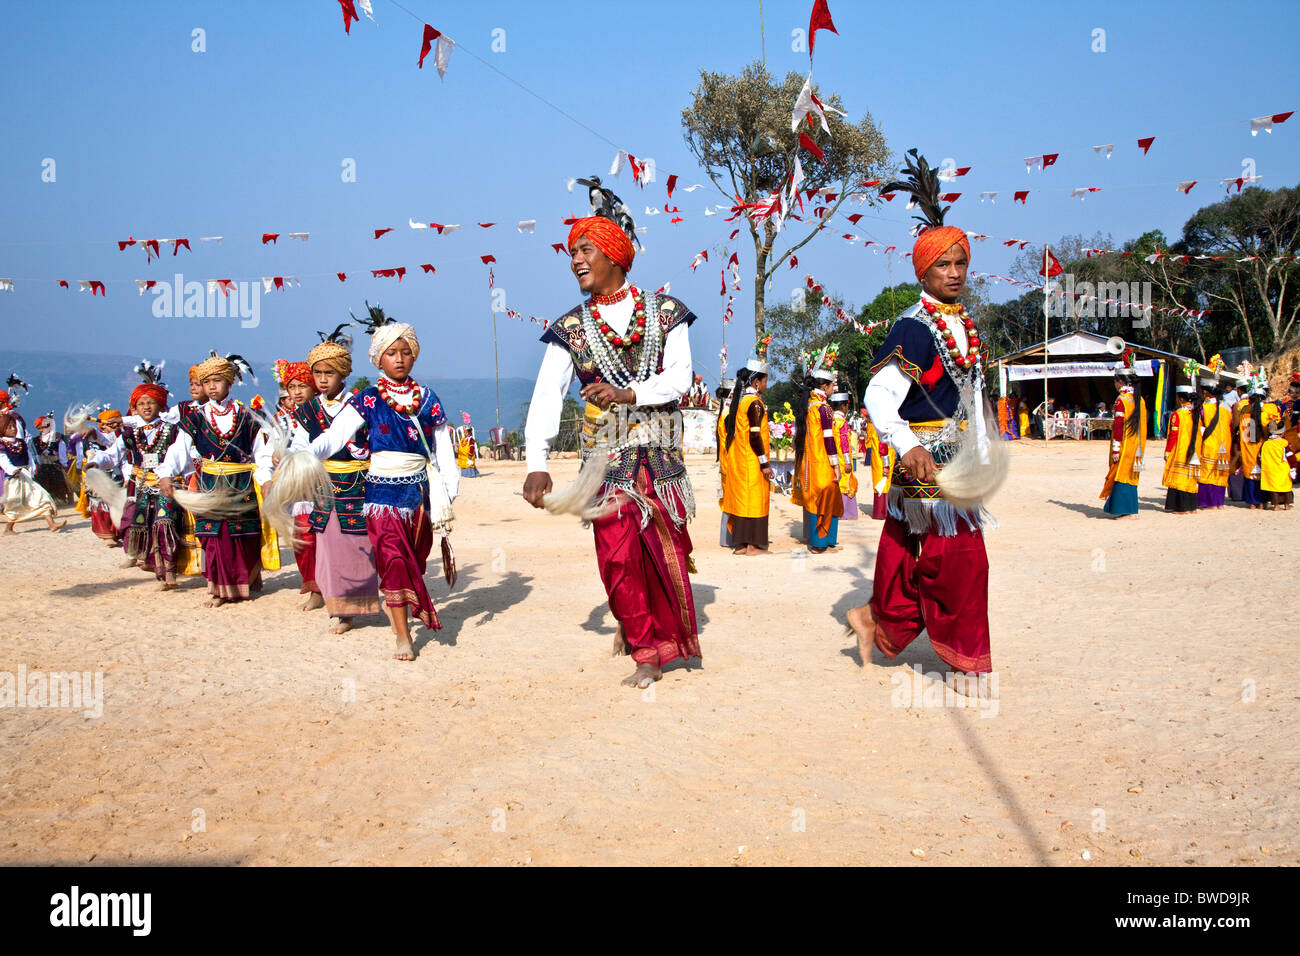 Khasi Men and Women Dancing in Traditional Festival Dress, Cherrapunji Village, Meghalaya State, North-East India Stock Photo